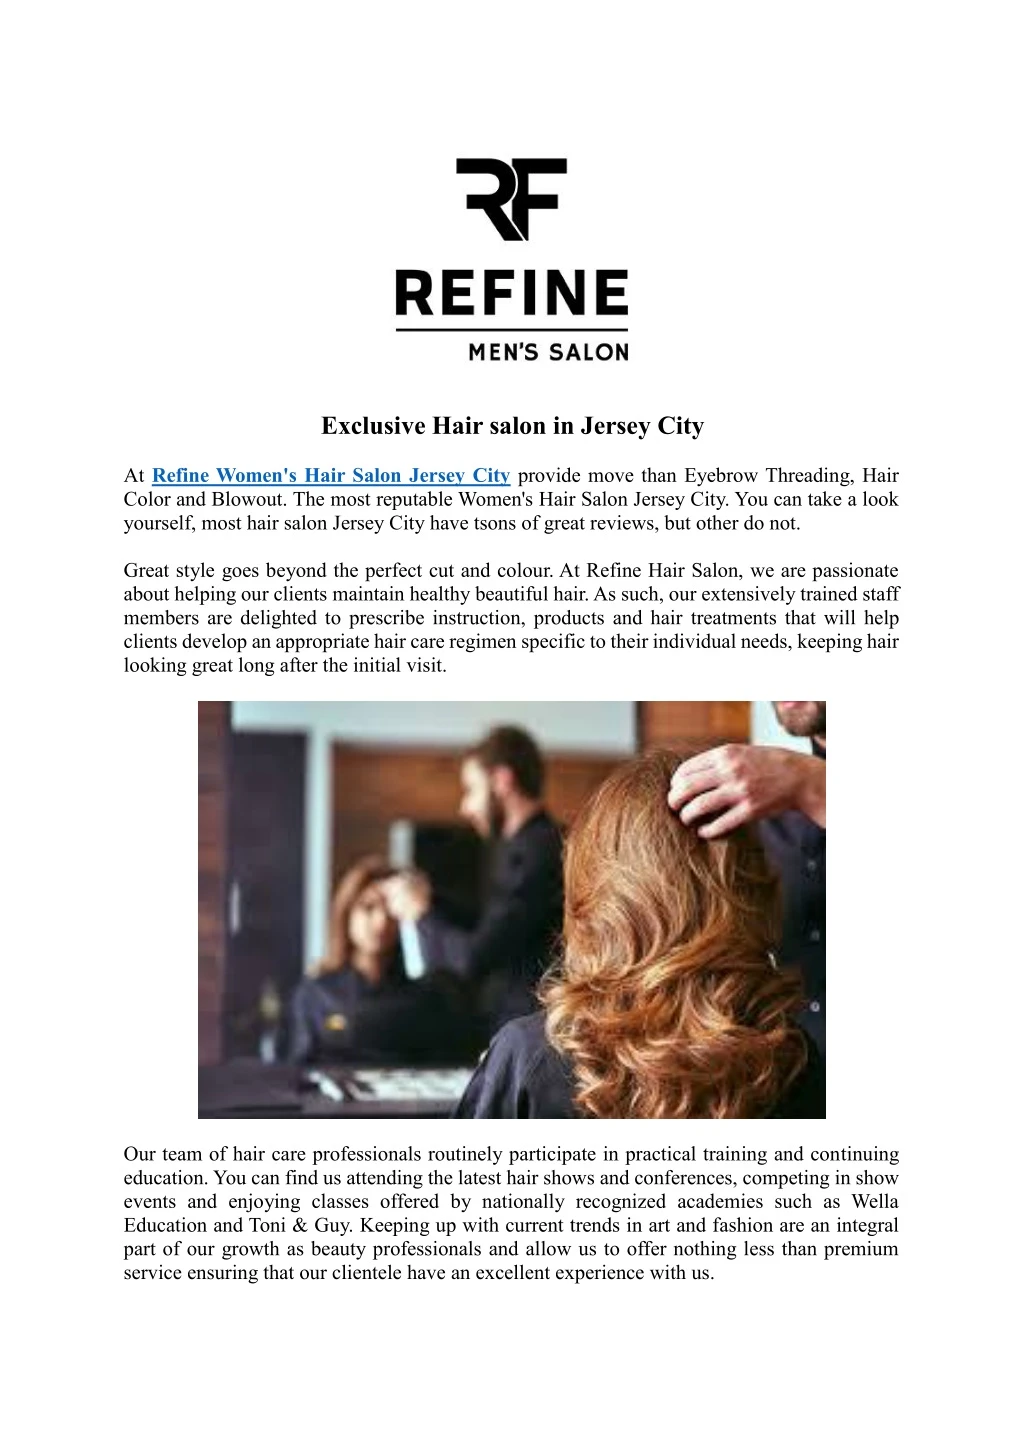 at refine women s hair salon jersey city provide